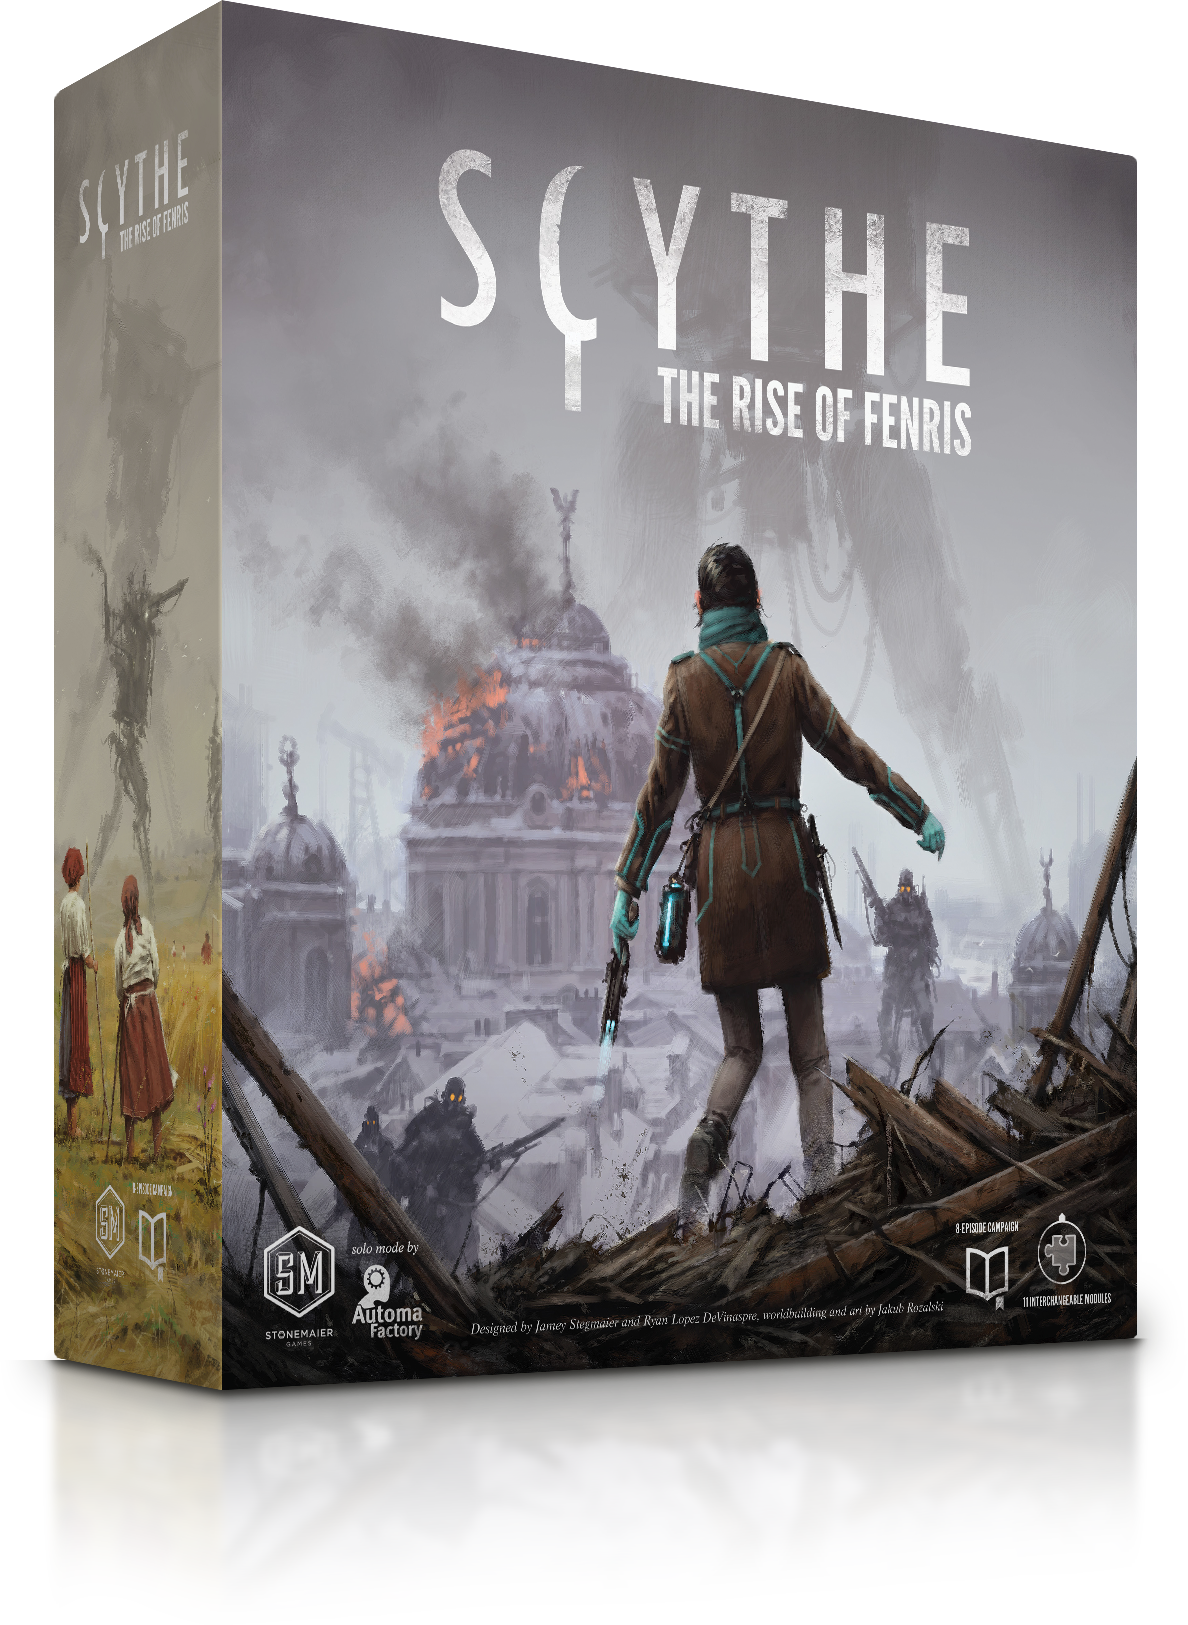 Scythe the Rise of Fenris